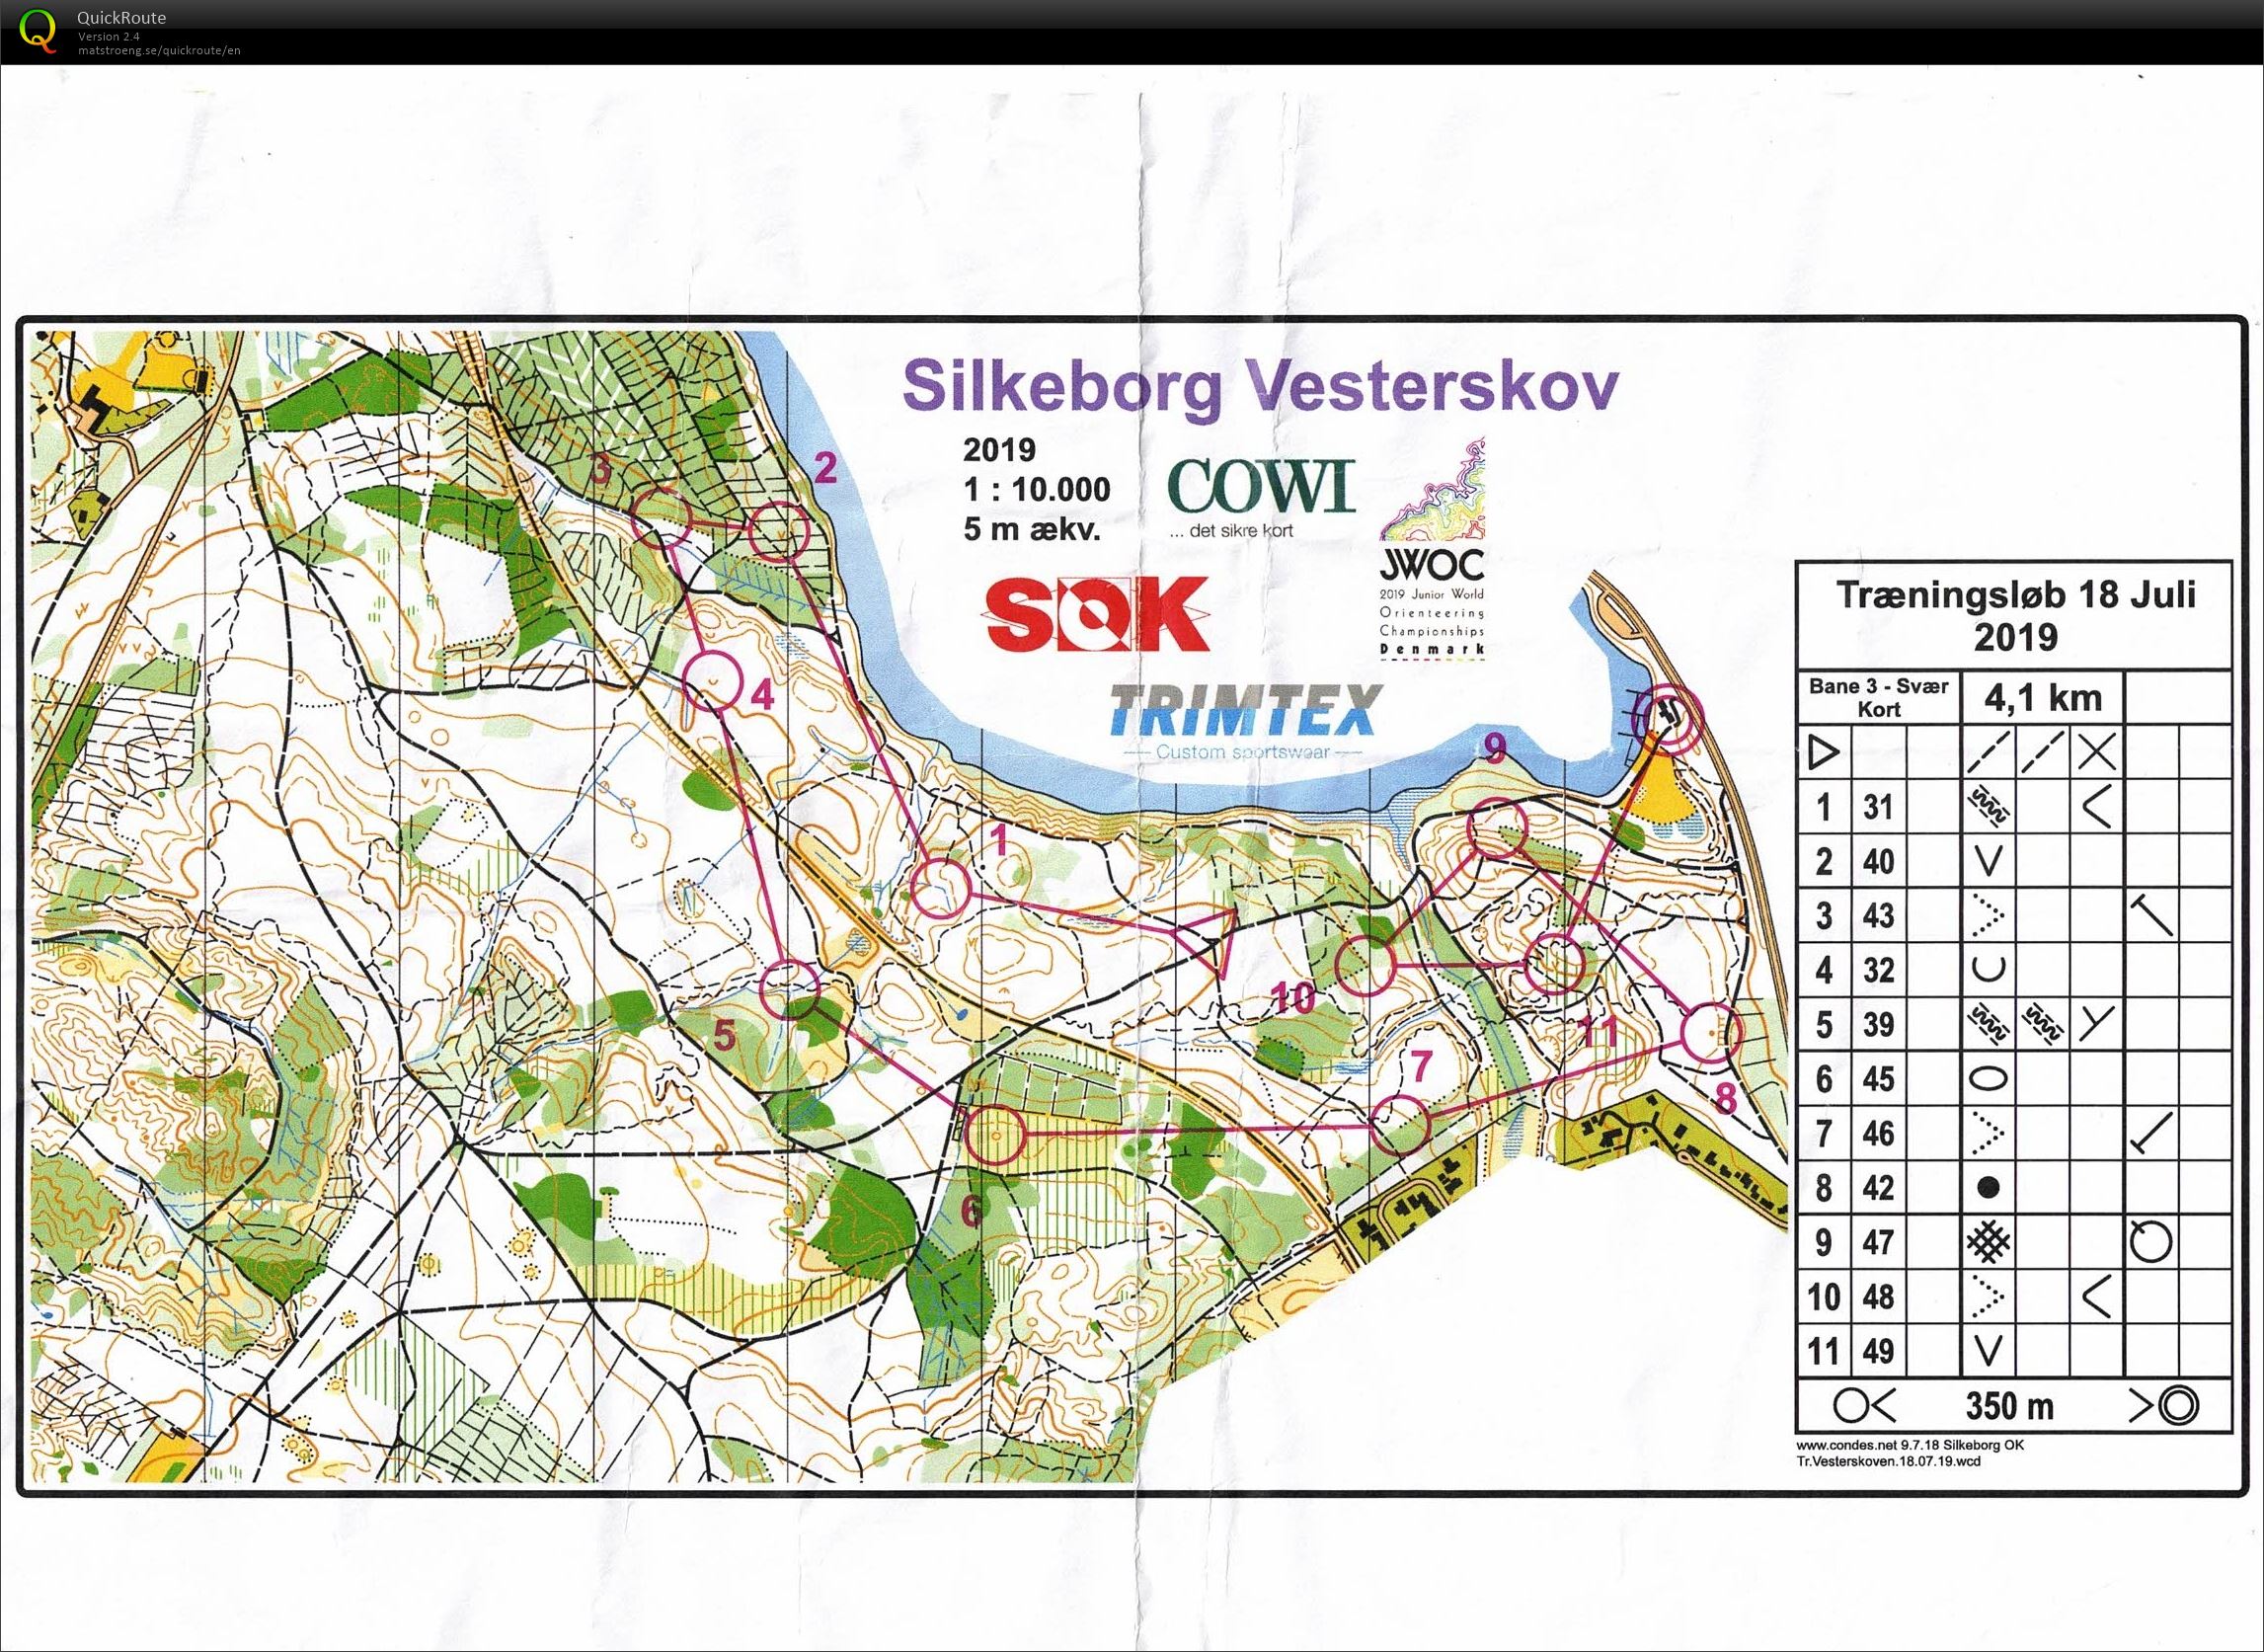 Silkeborg Vesterskov, Bane 3, Pia Gade, 180719 (2019-07-18)